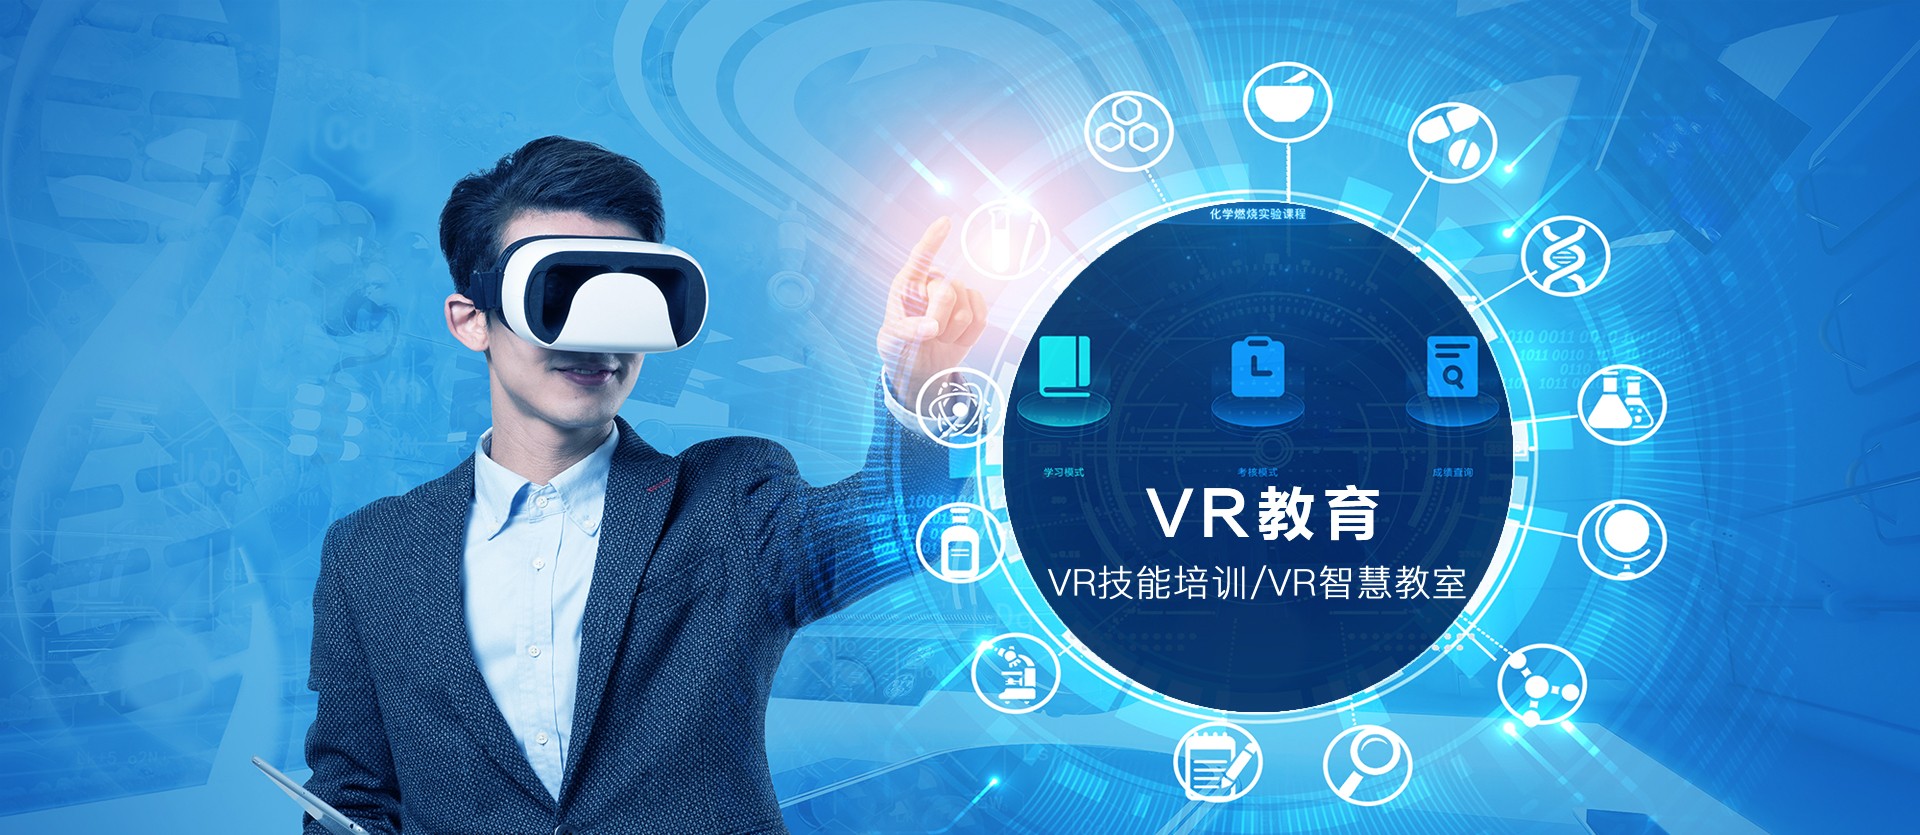 VR虚拟仿真公司